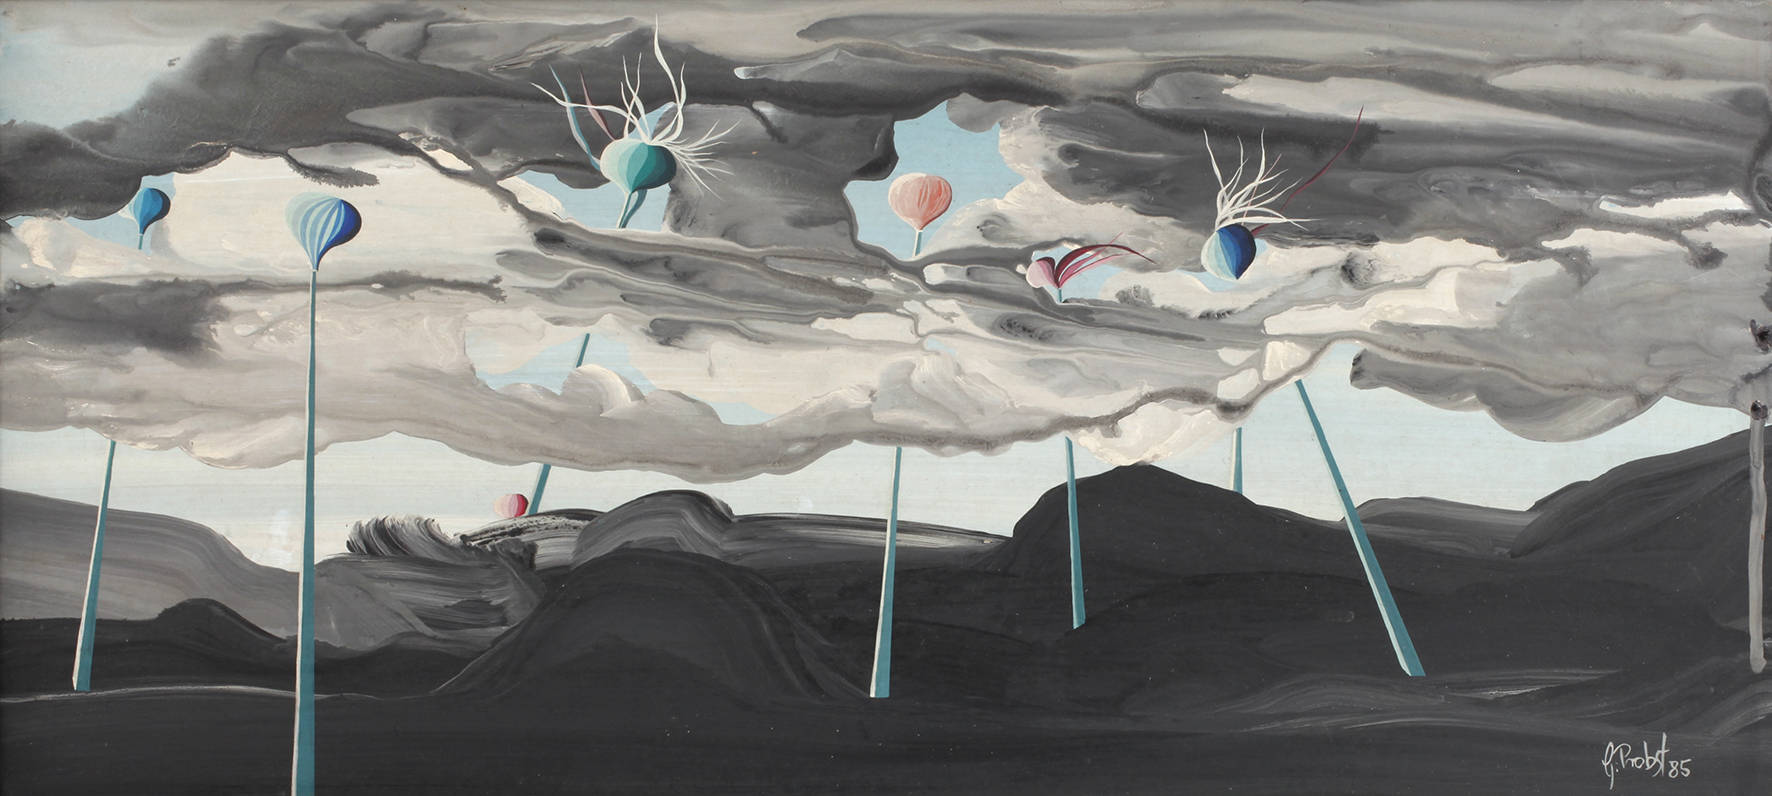 G. Probst, Surrealistische Landschaft